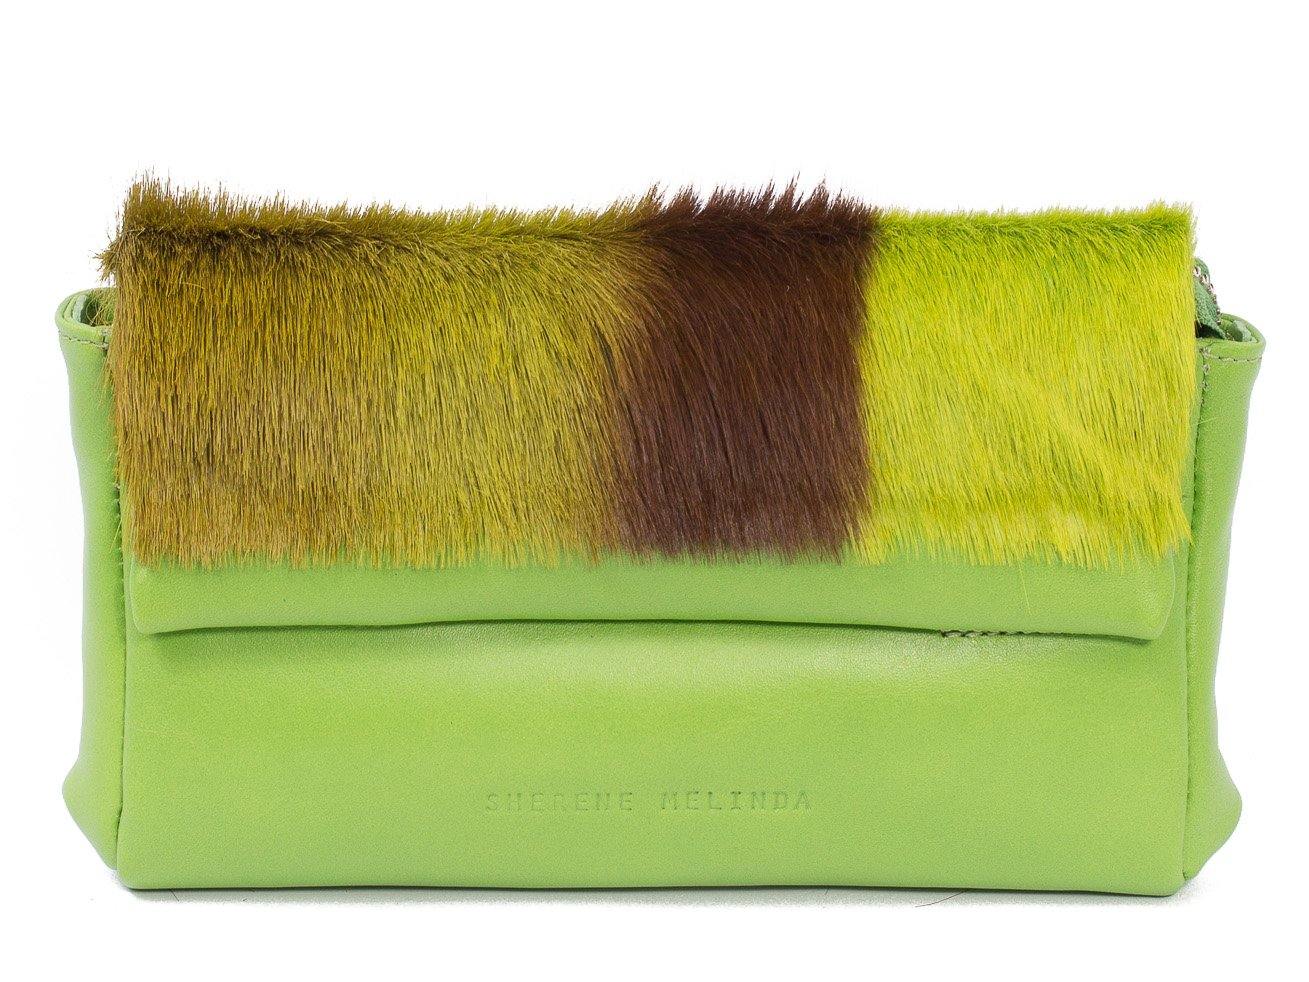 sherene melinda springbok hair-on-hide lime green leather Sophy SS18 Clutch Bag stripe front strap